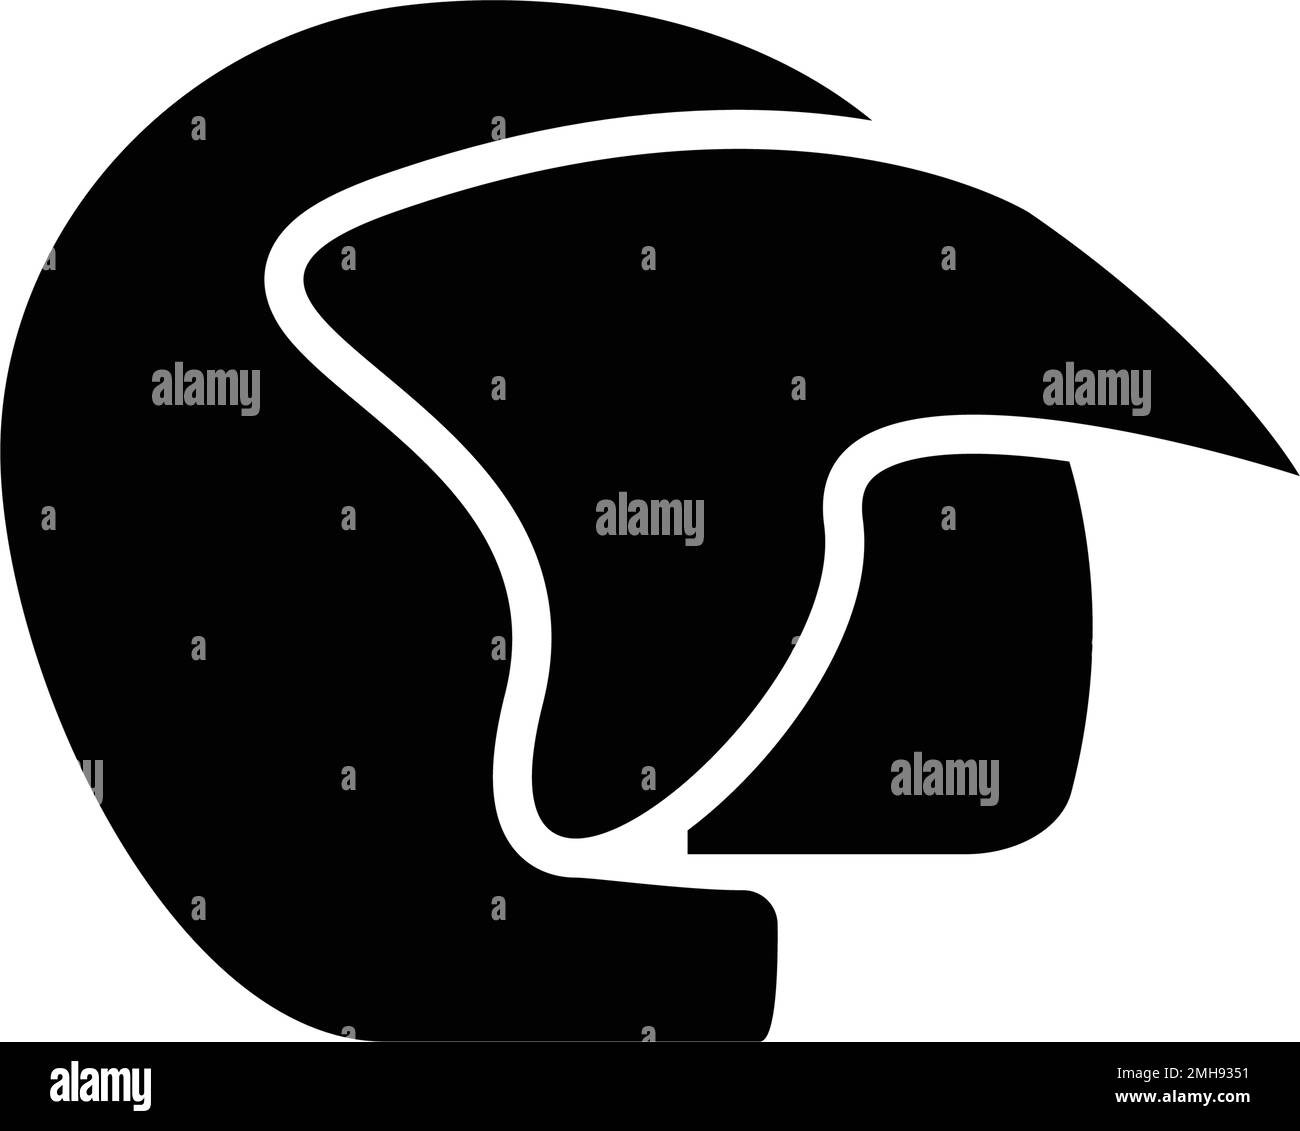 helmet logo stock illustration design Stock Vector